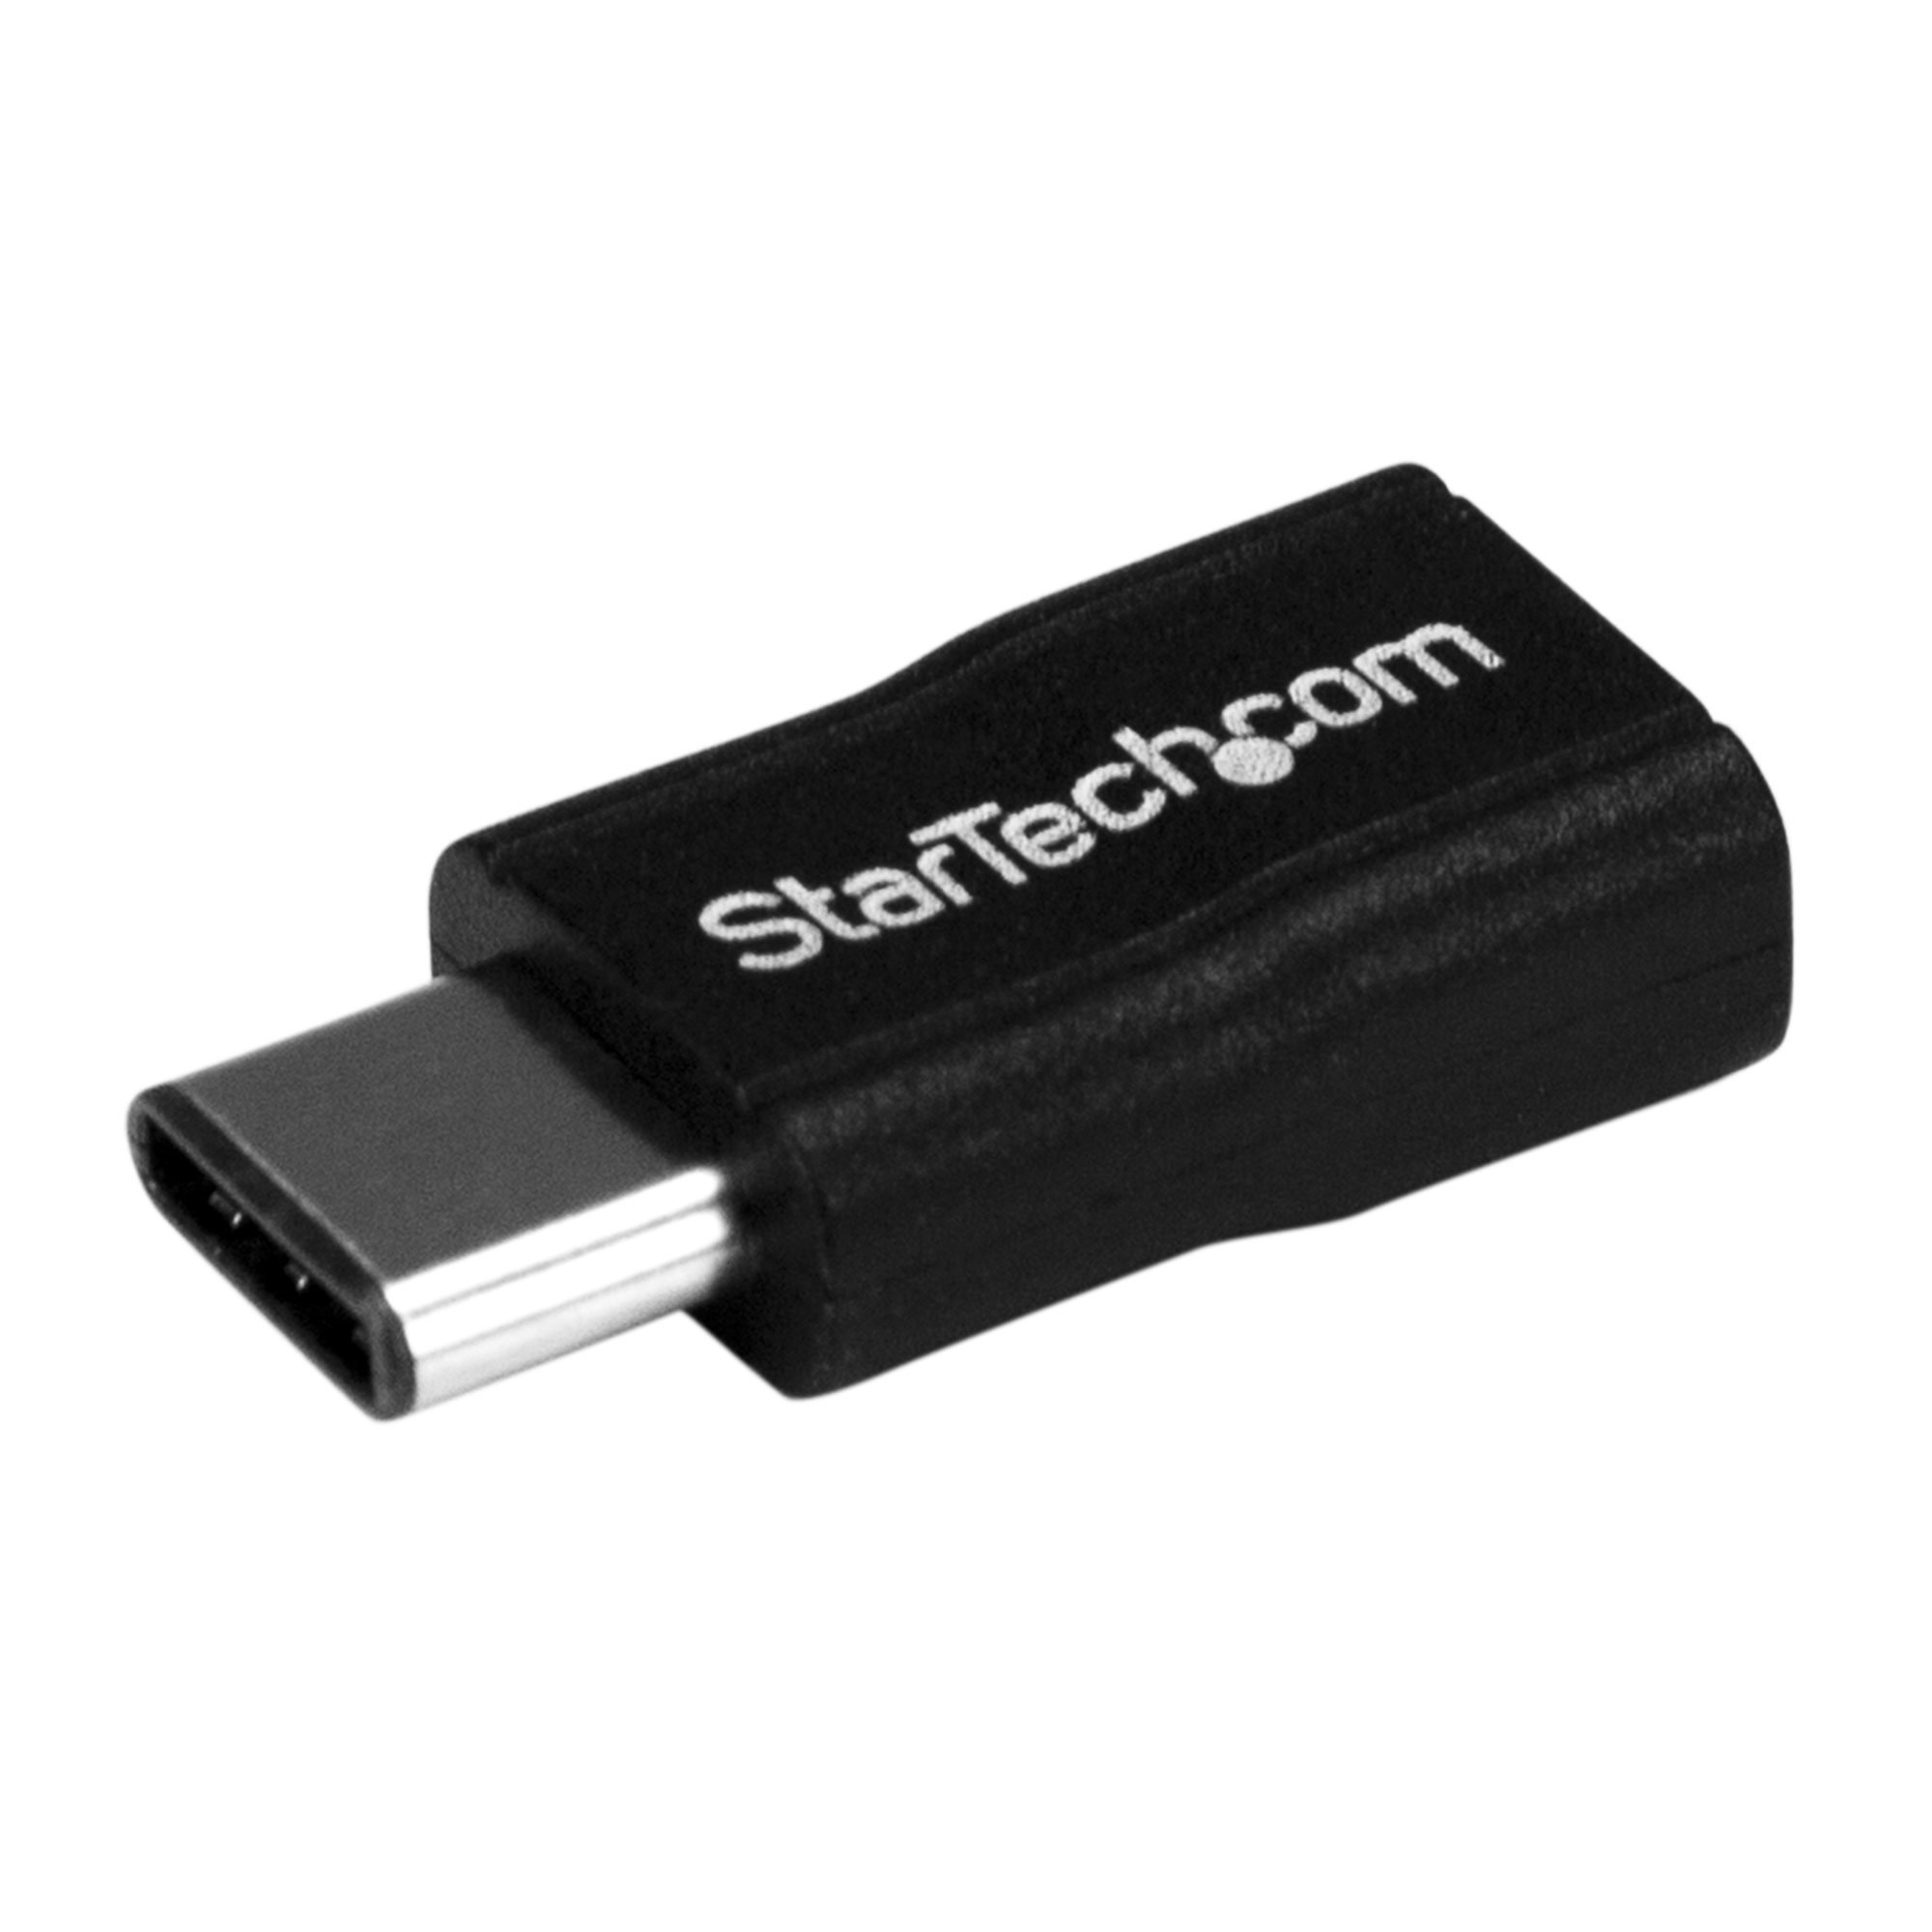 StarTech USB C to Micro-USB Adapter M/F - USB 2.0